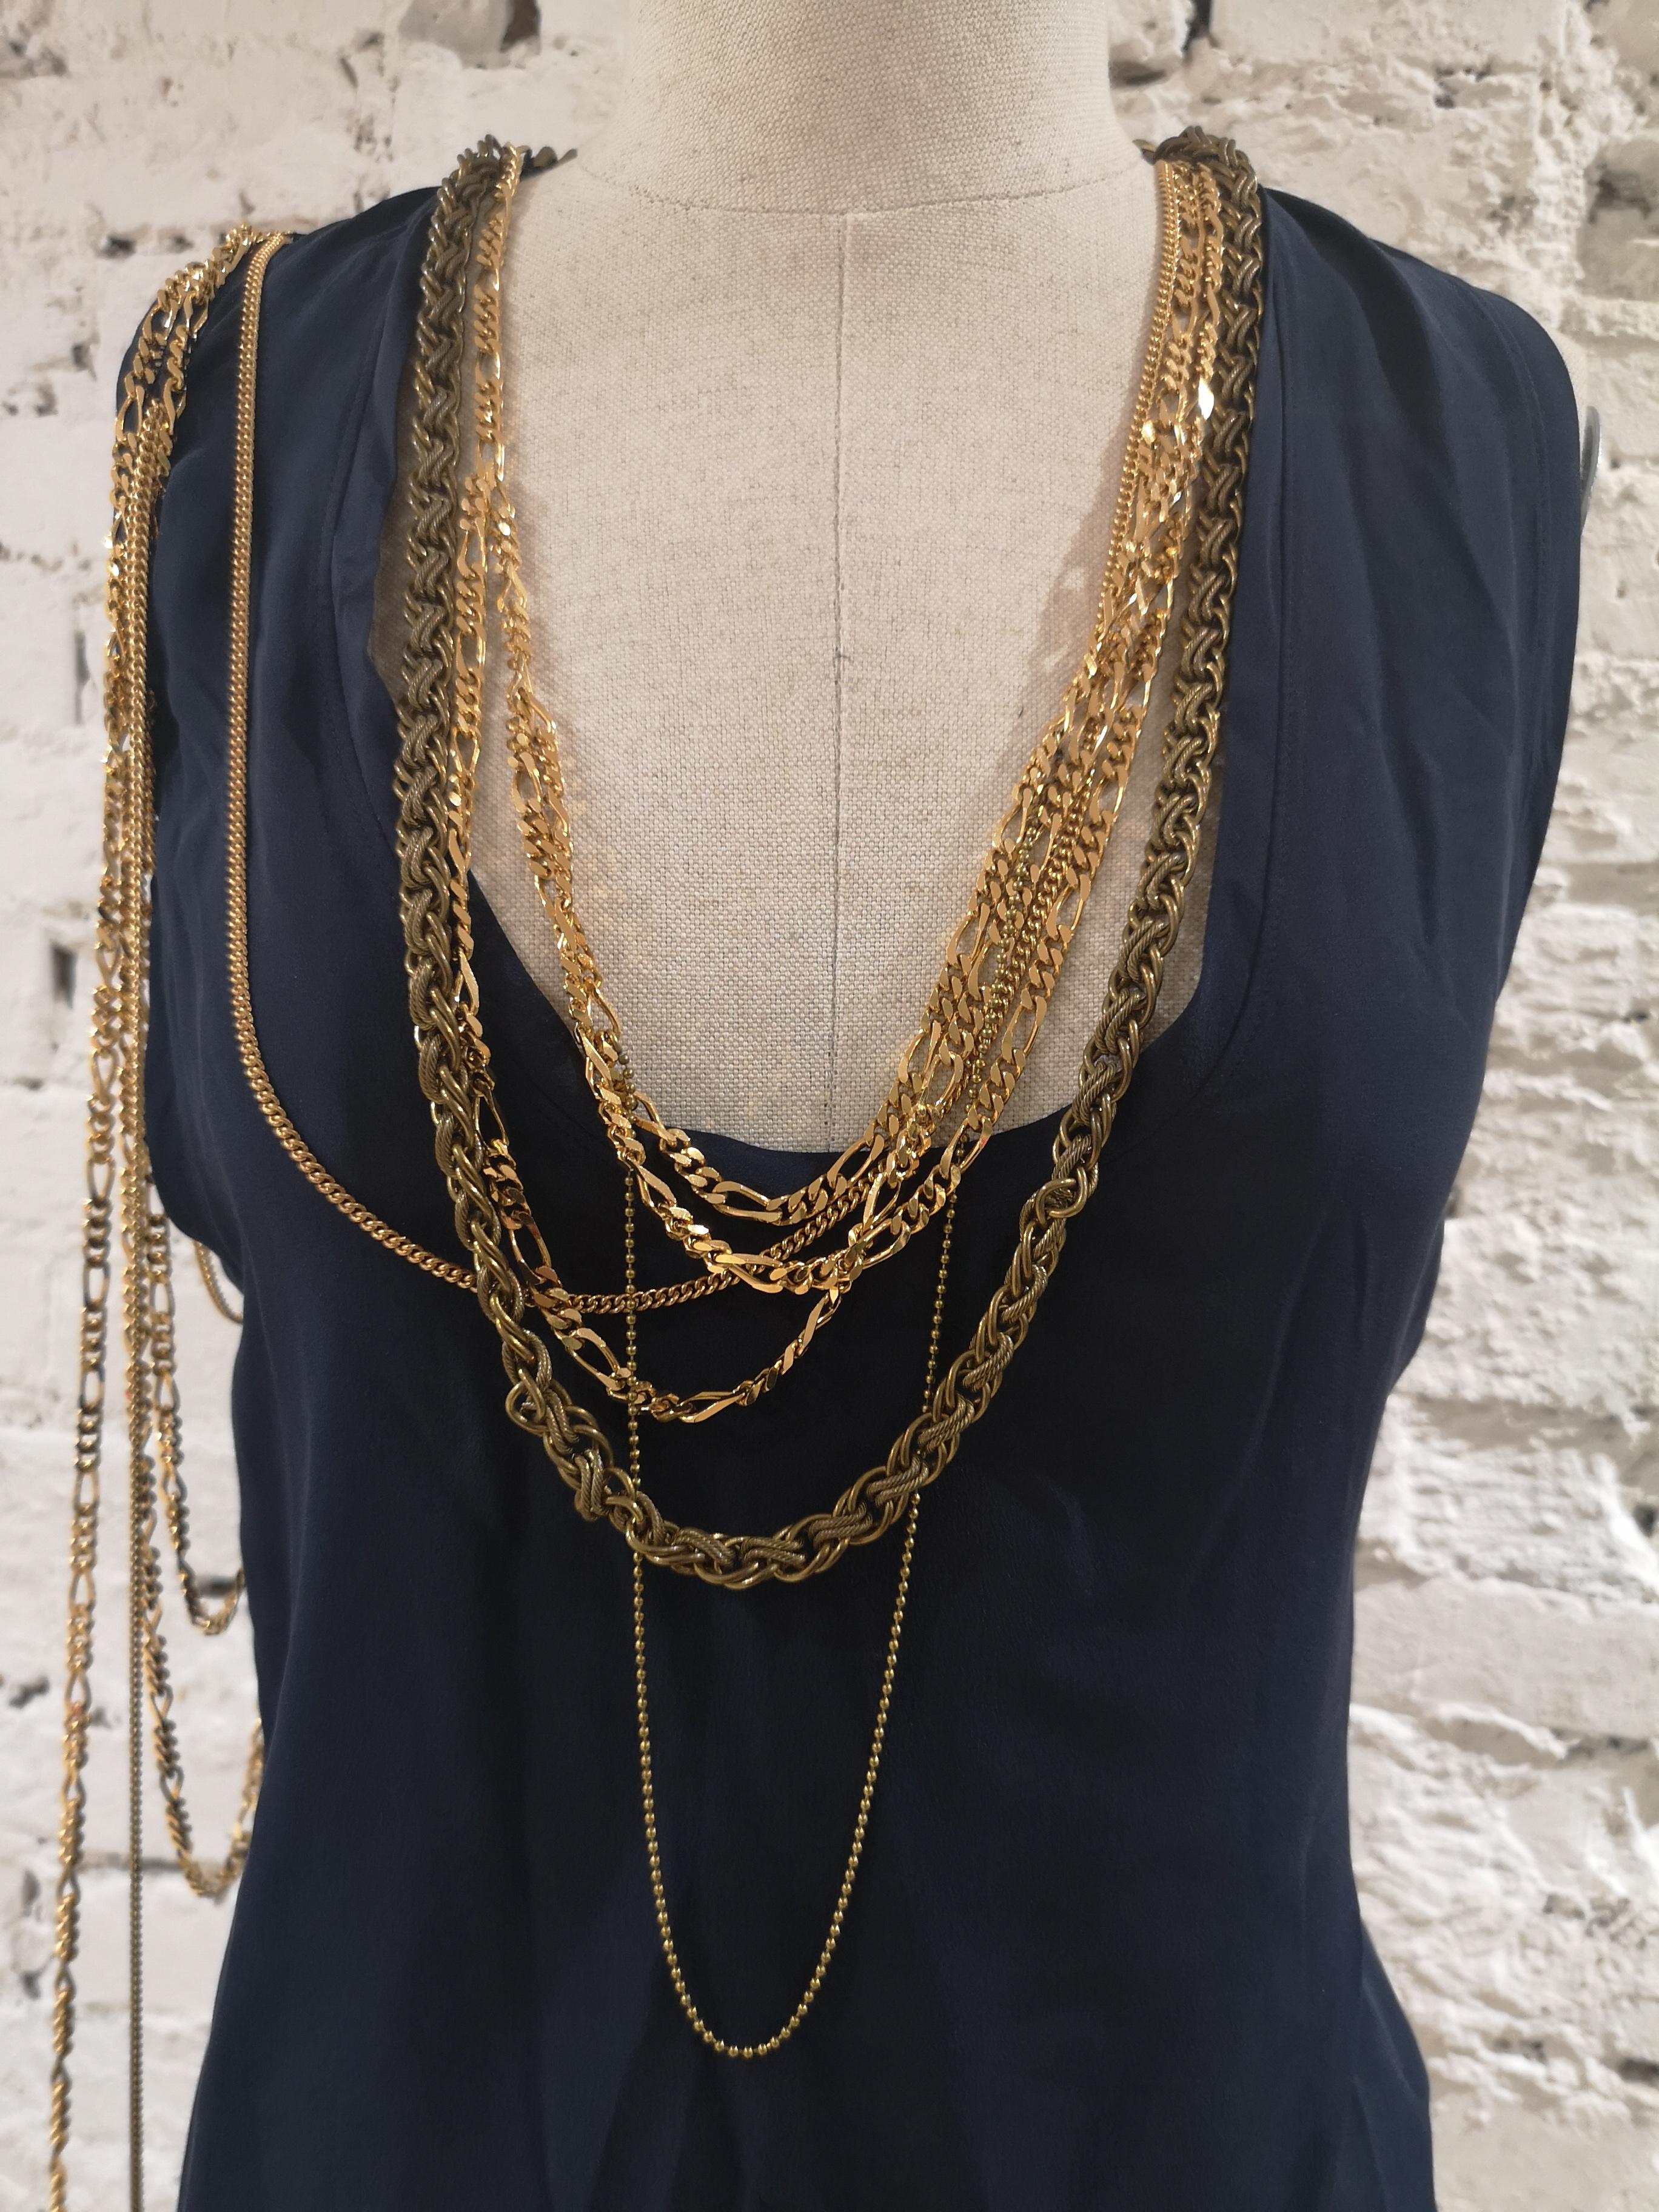 Balmain Navy Blue Sleeveless Top with Gold Chains
Balmain blue top wit gold chains all over
Composition: 100% Silk
size S